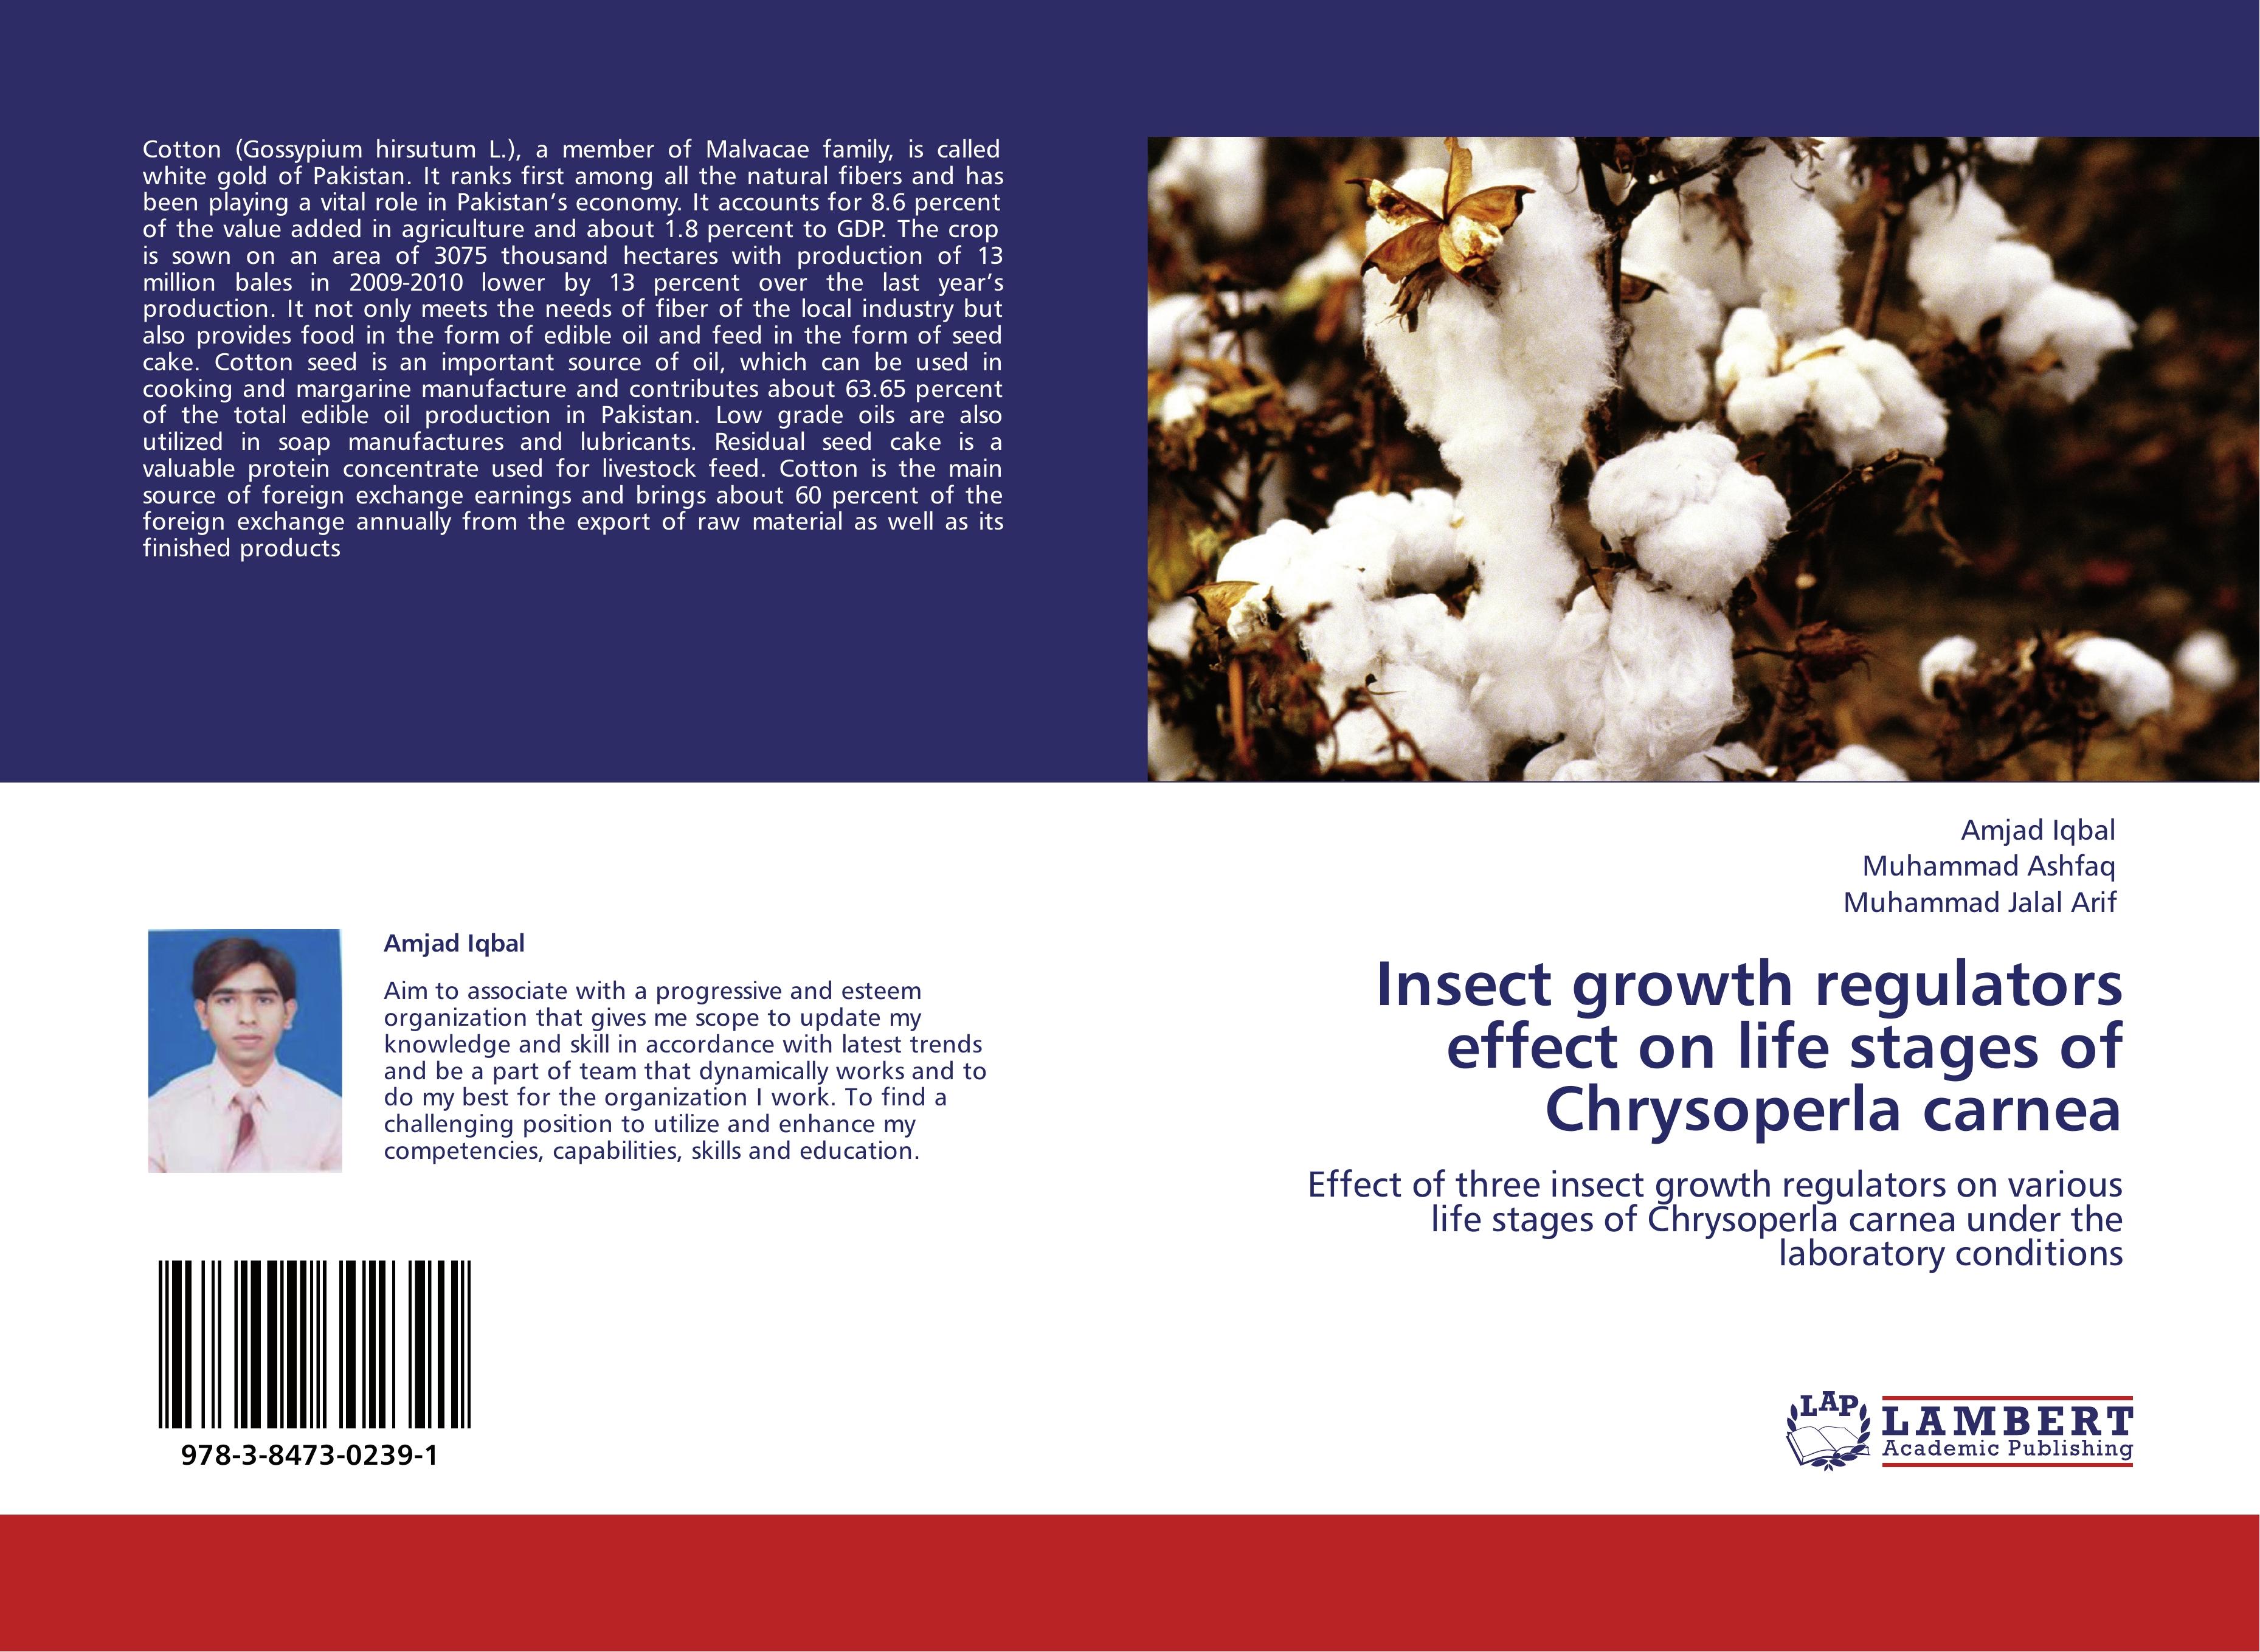 Insect growth regulators effect on life stages of Chrysoperla carnea - Amjad Iqbal Muhammad Ashfaq Muhammad Jalal Arif